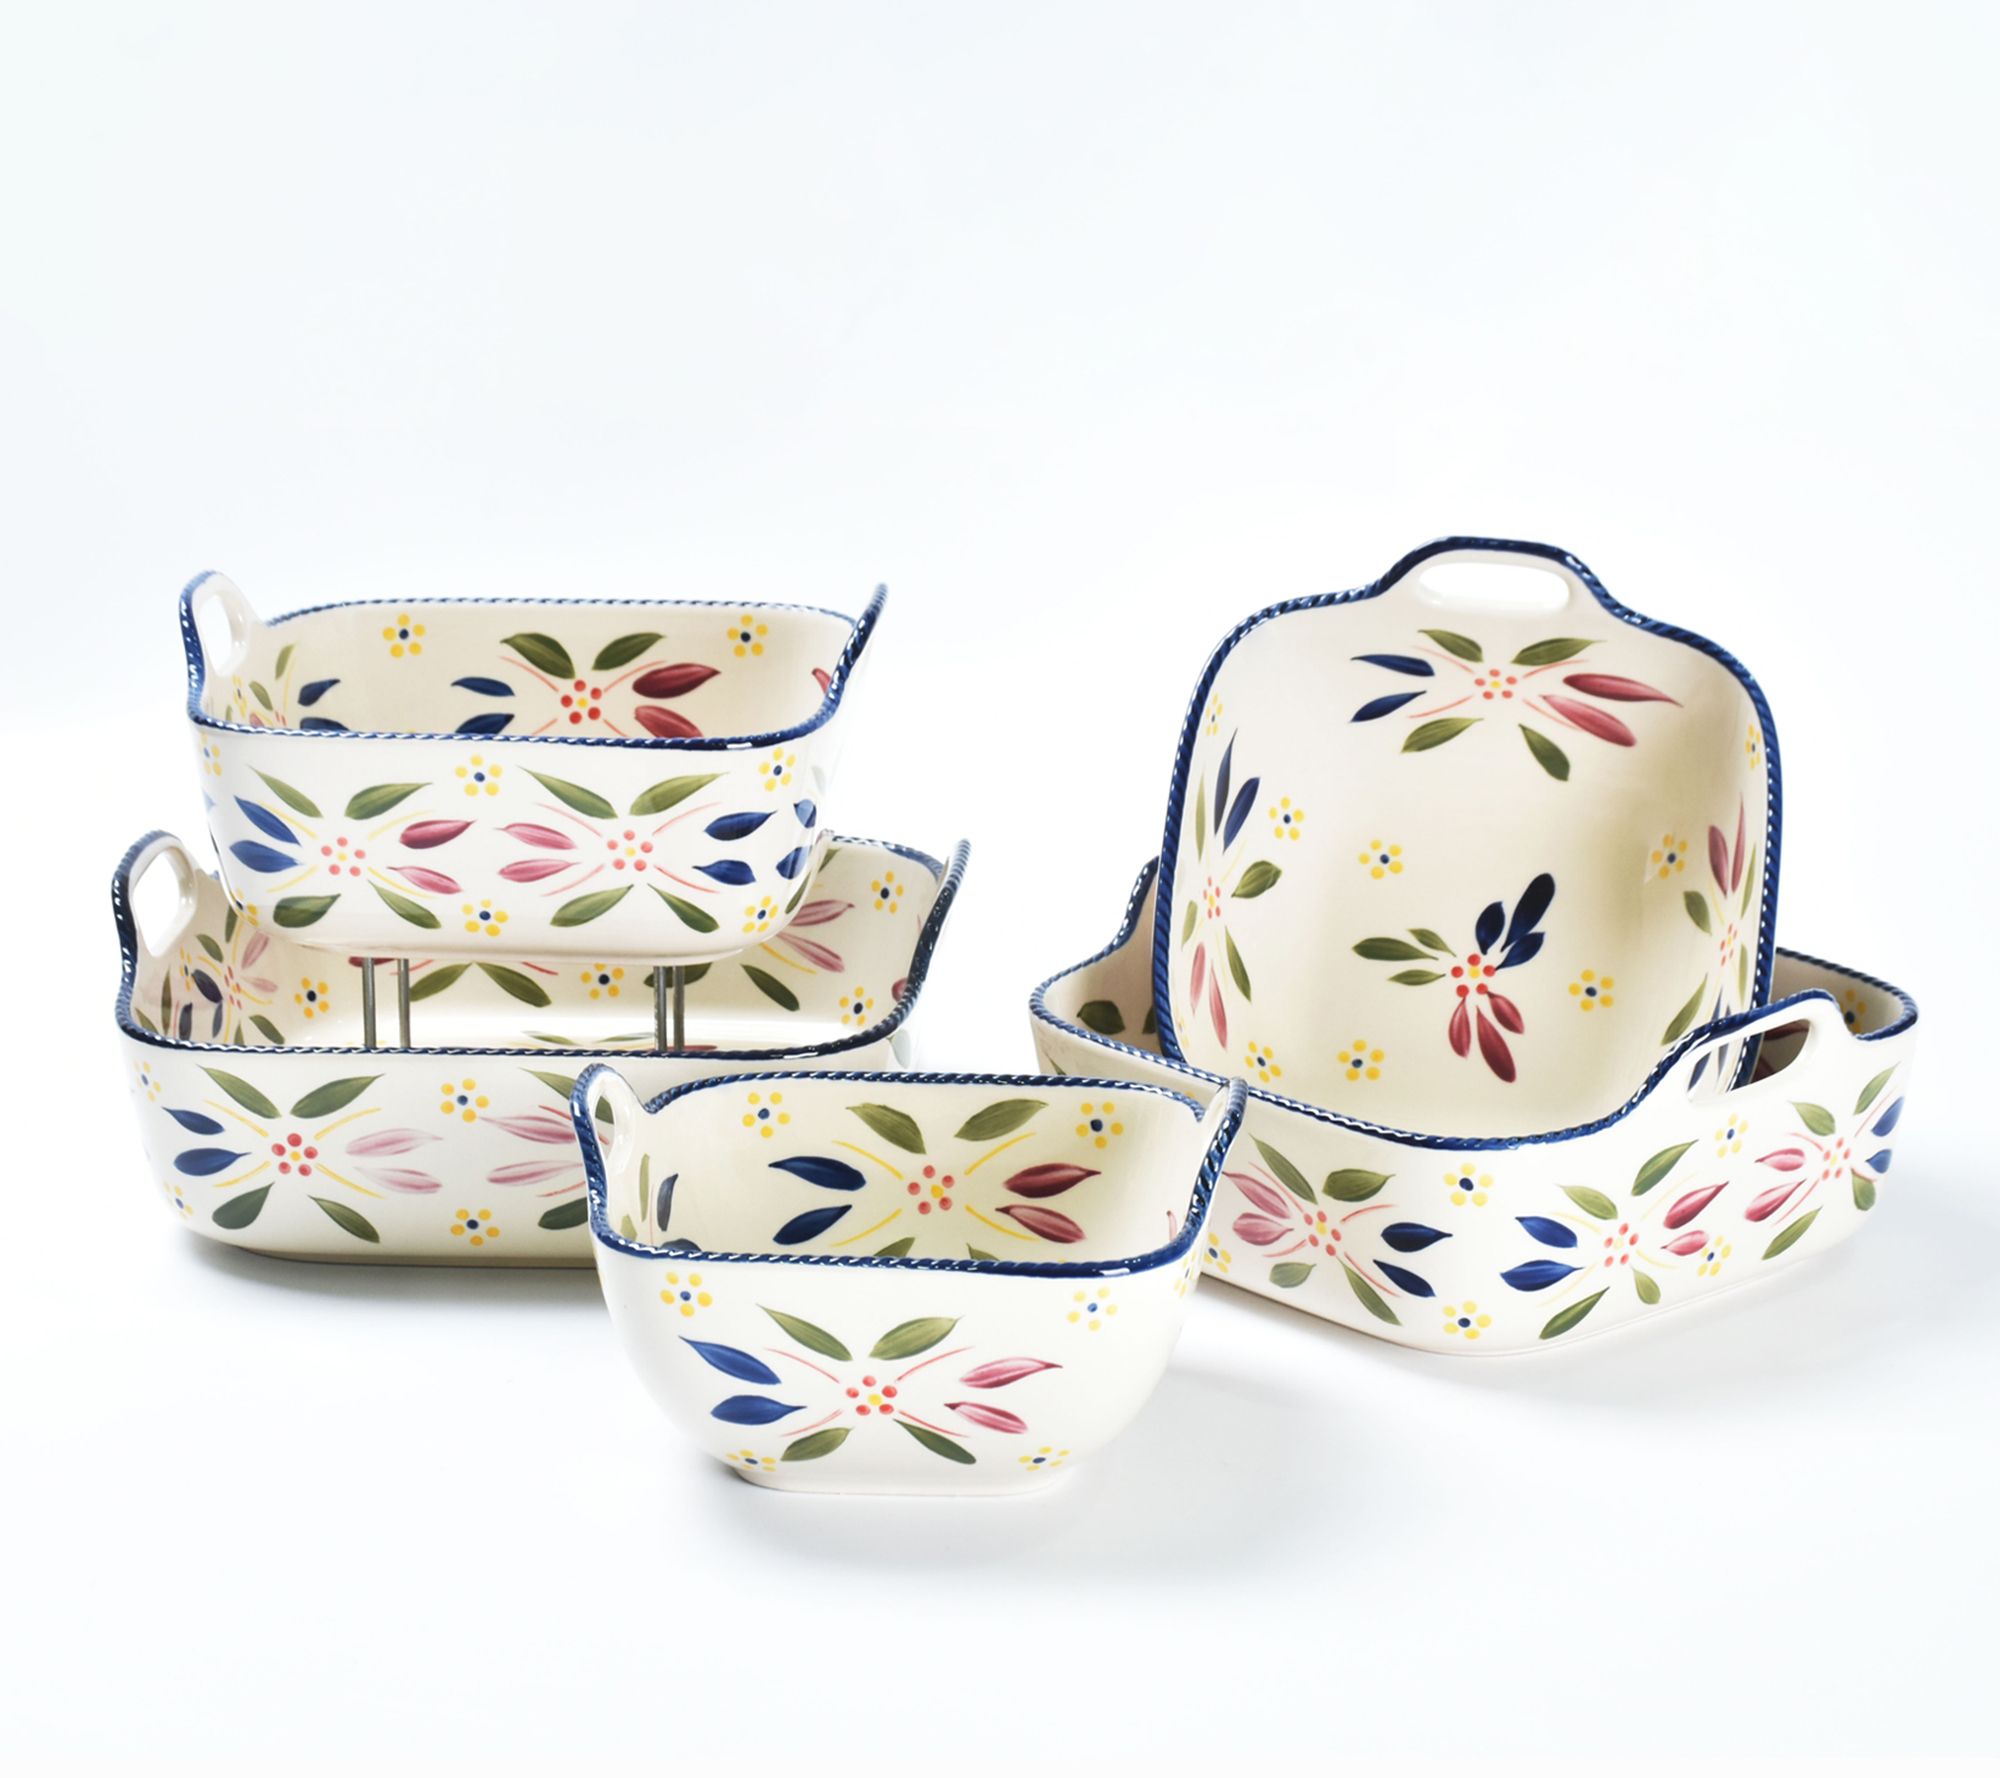 Le Creuset 5-Piece White Stoneware Ceramic Bakeware Set + Reviews